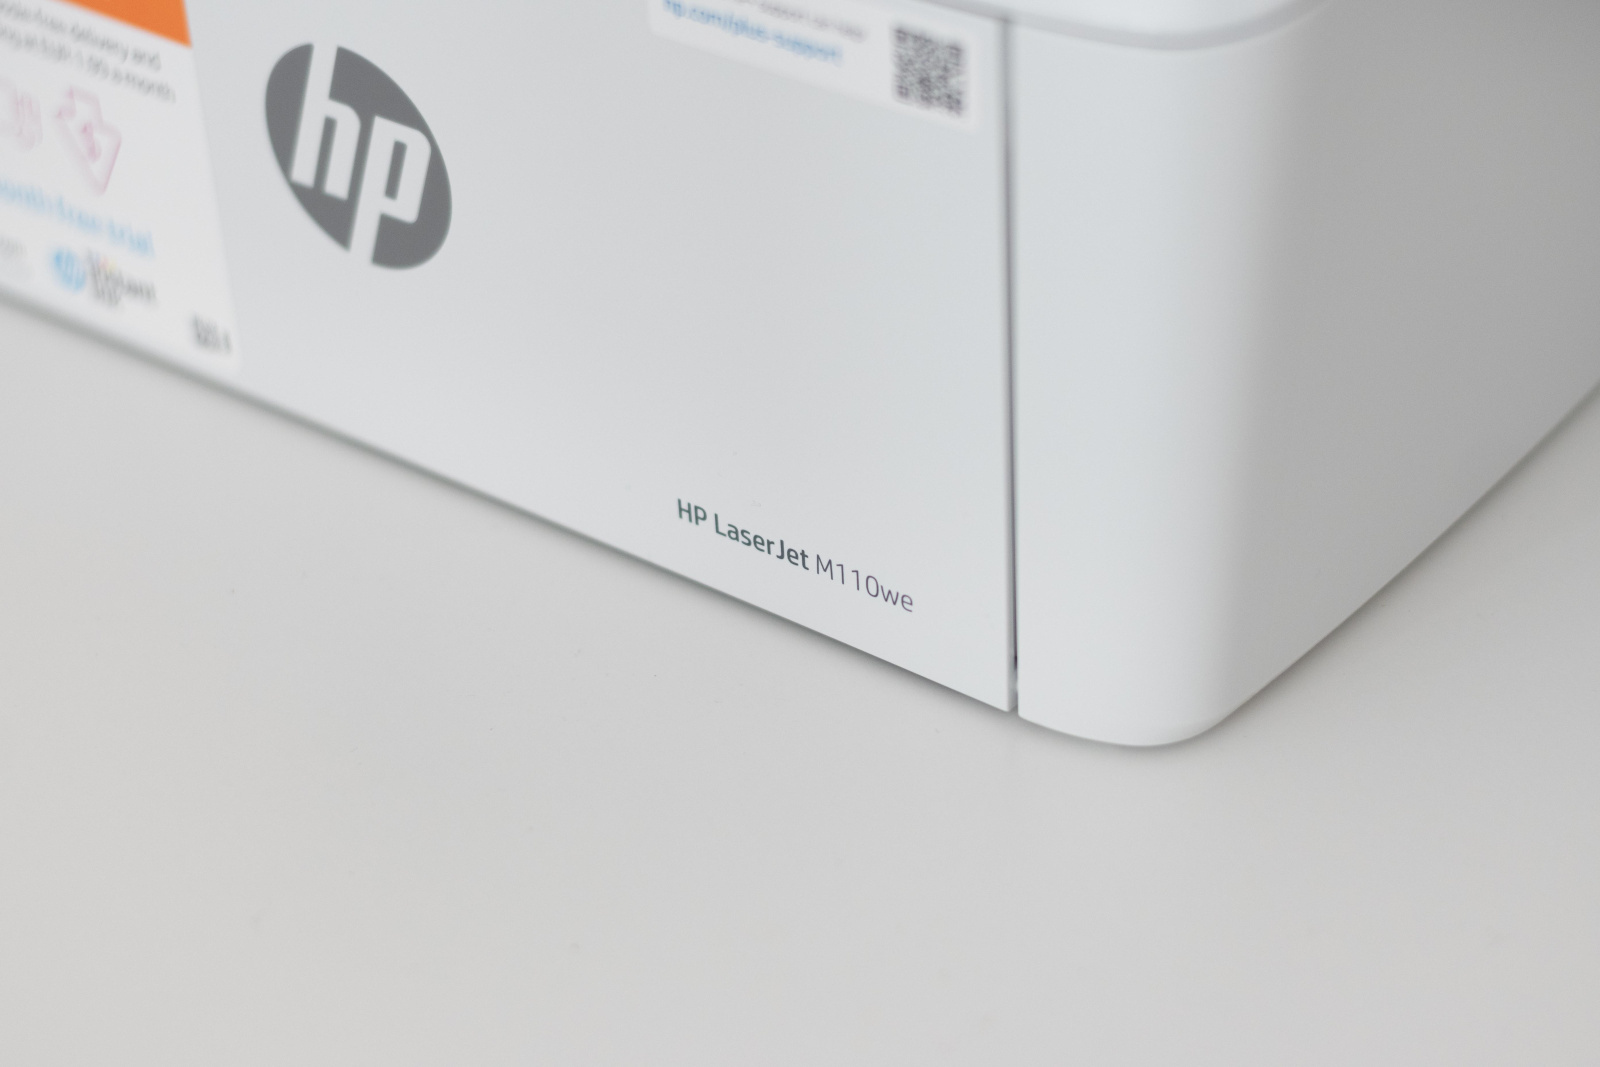 HP LaserJet M110we printer detalj.